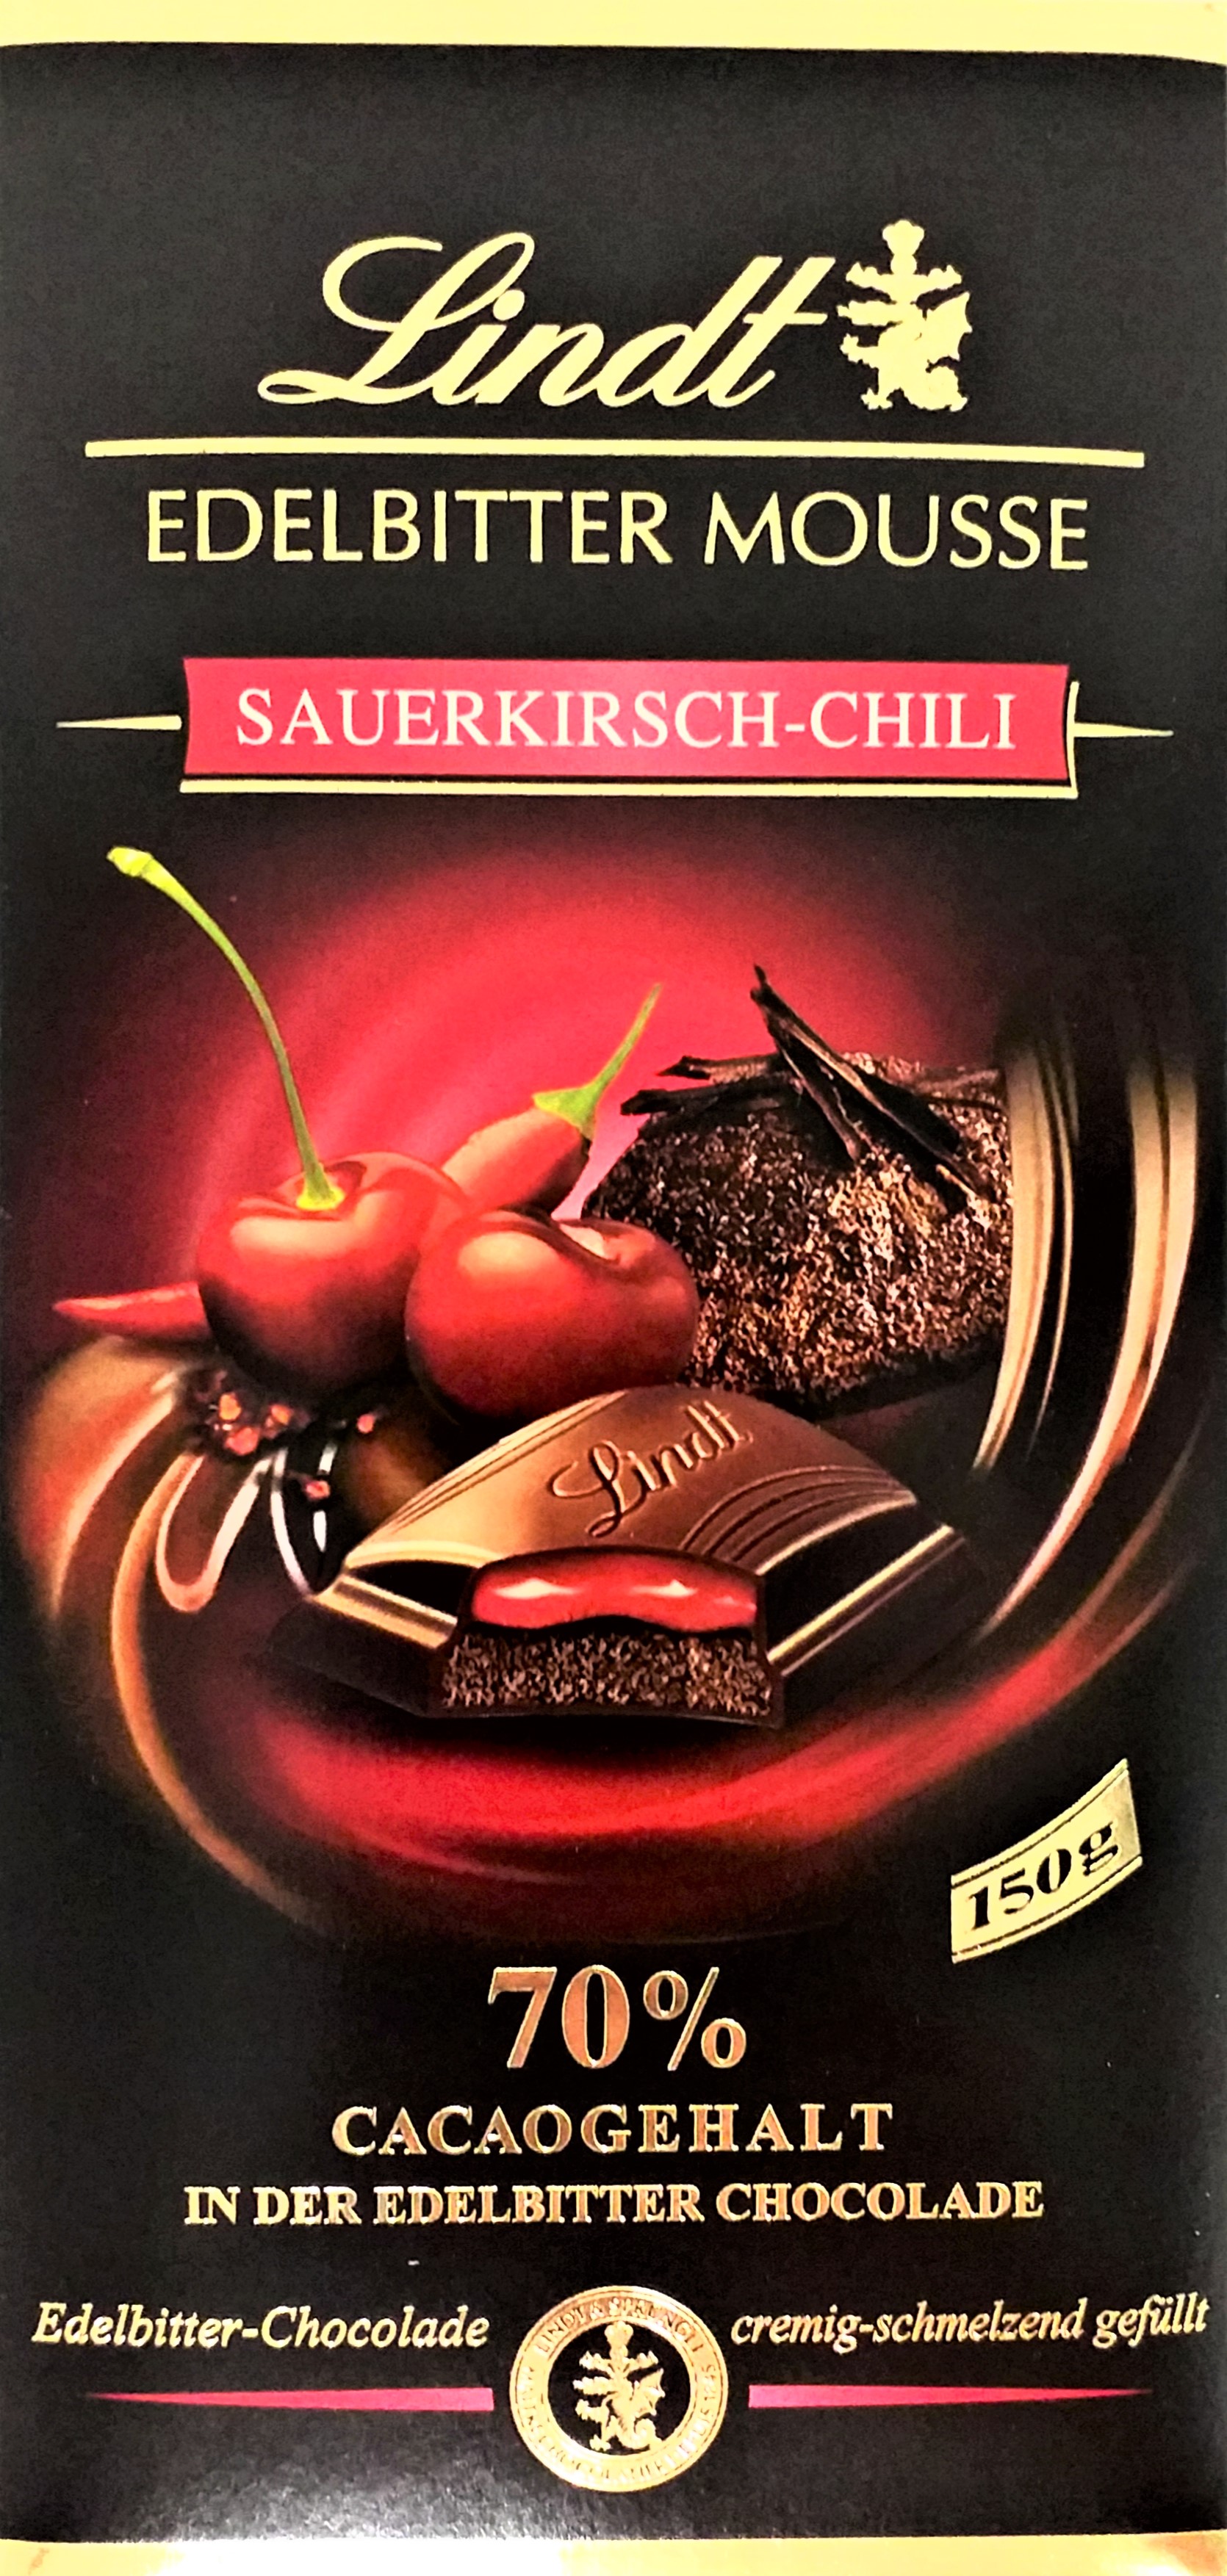 Lindt Edelbitter Schokolade Mousse Sauerkirsch-Chili 150g